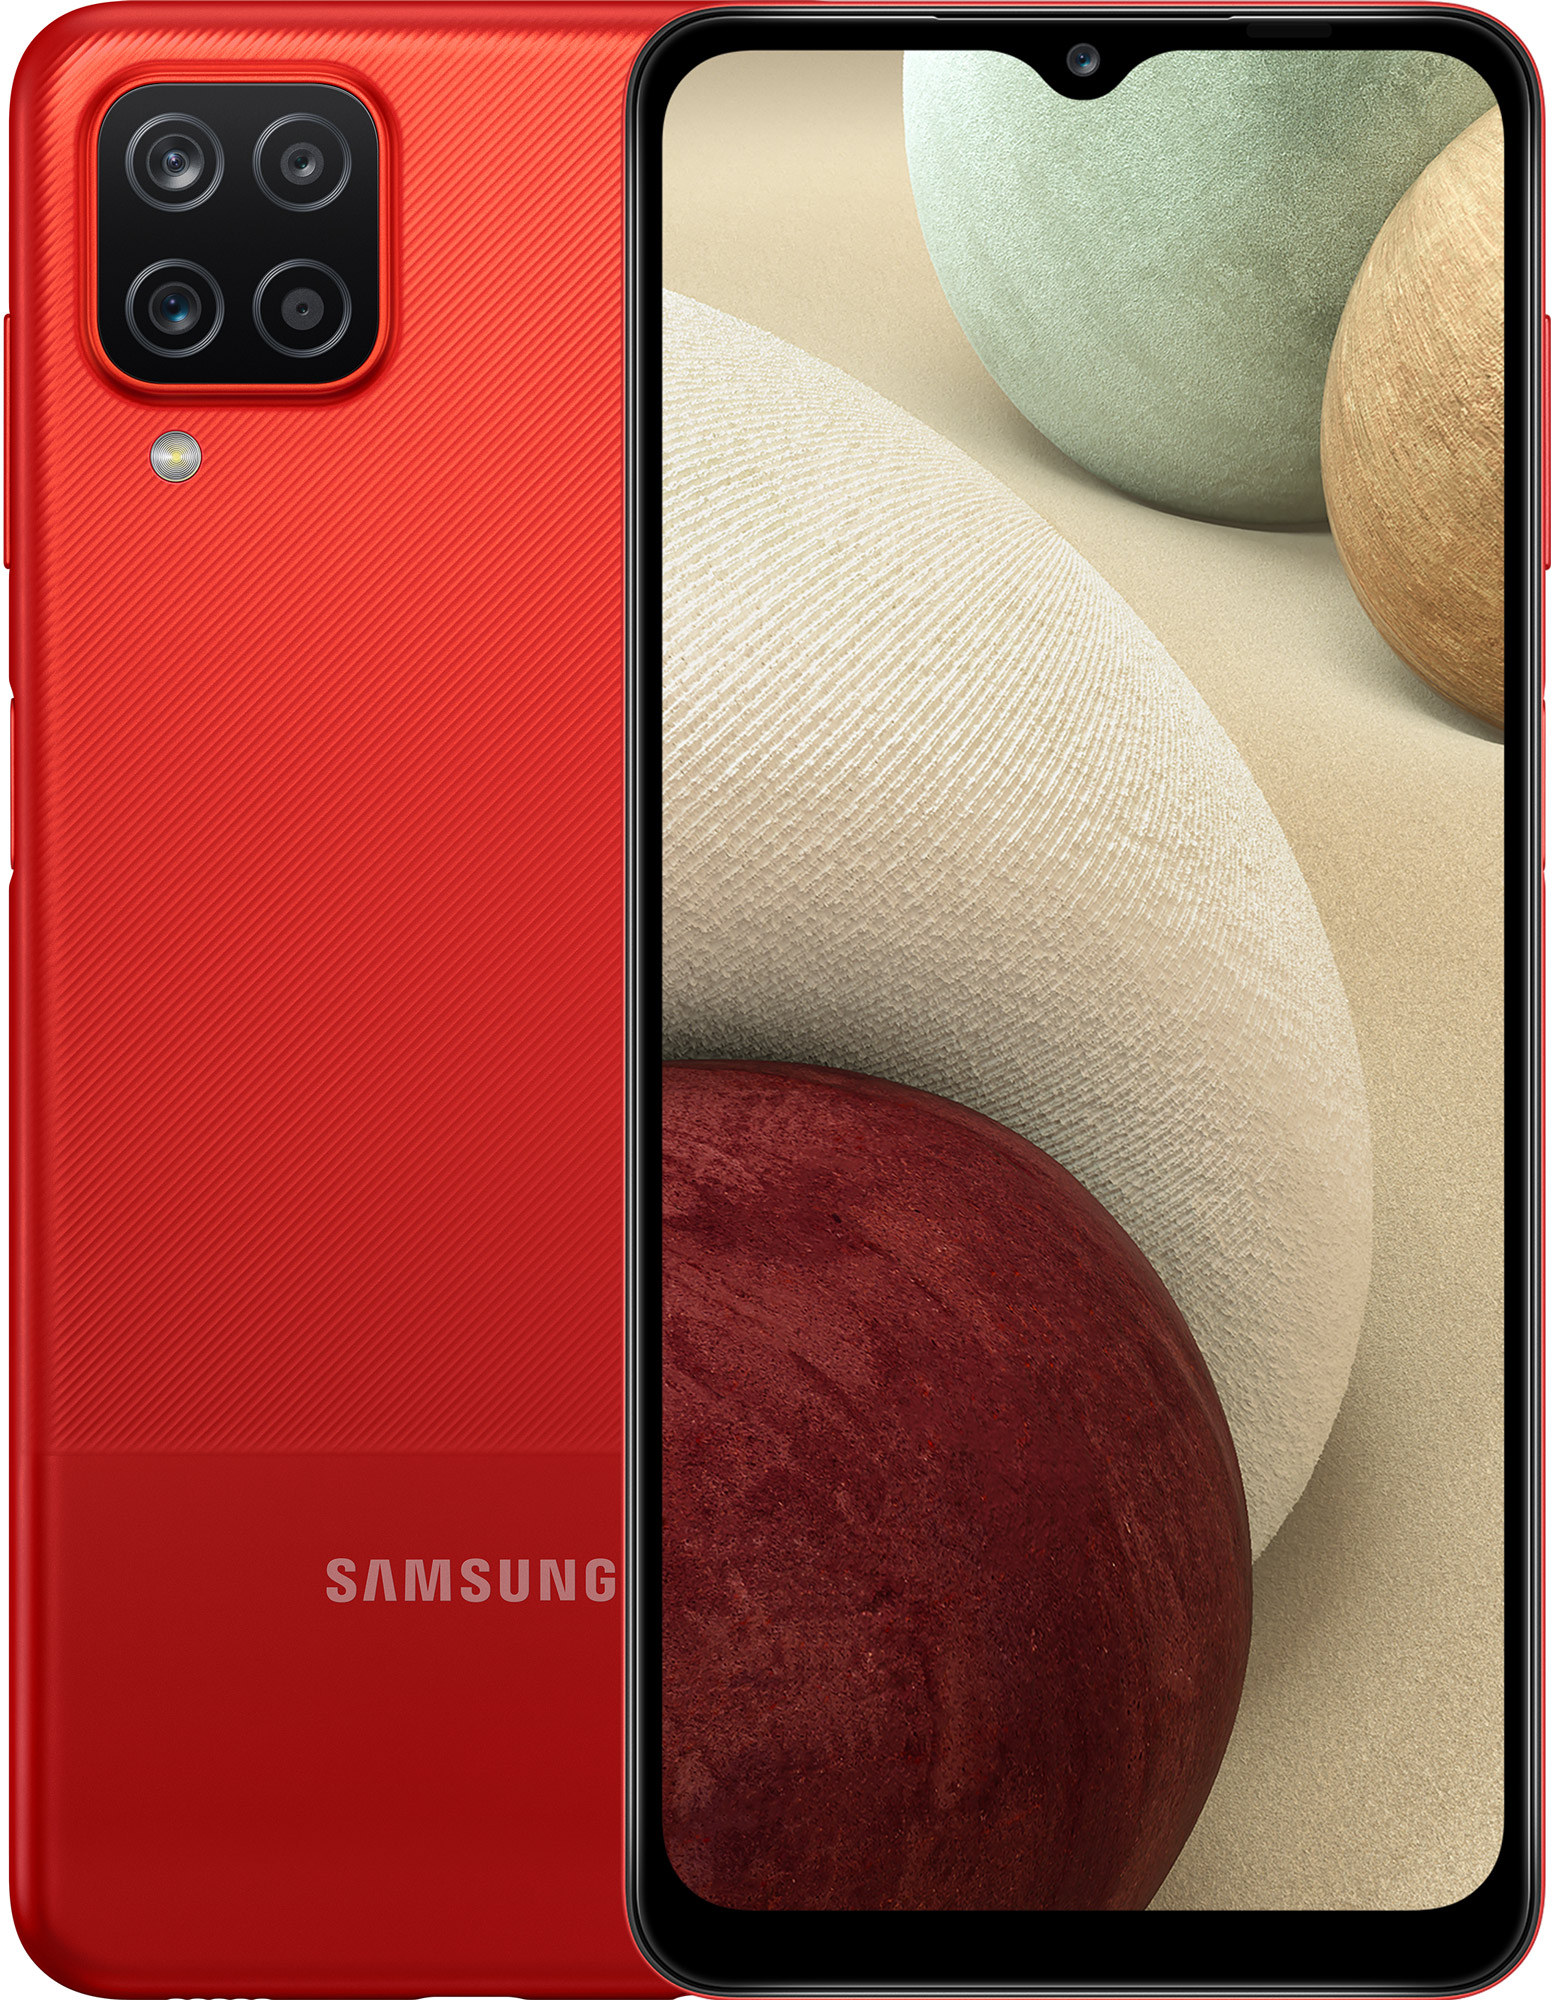 Смартфон SAMSUNG Galaxy A12 4/64GB Red (SM-A127FZRVSEK) в Киеве